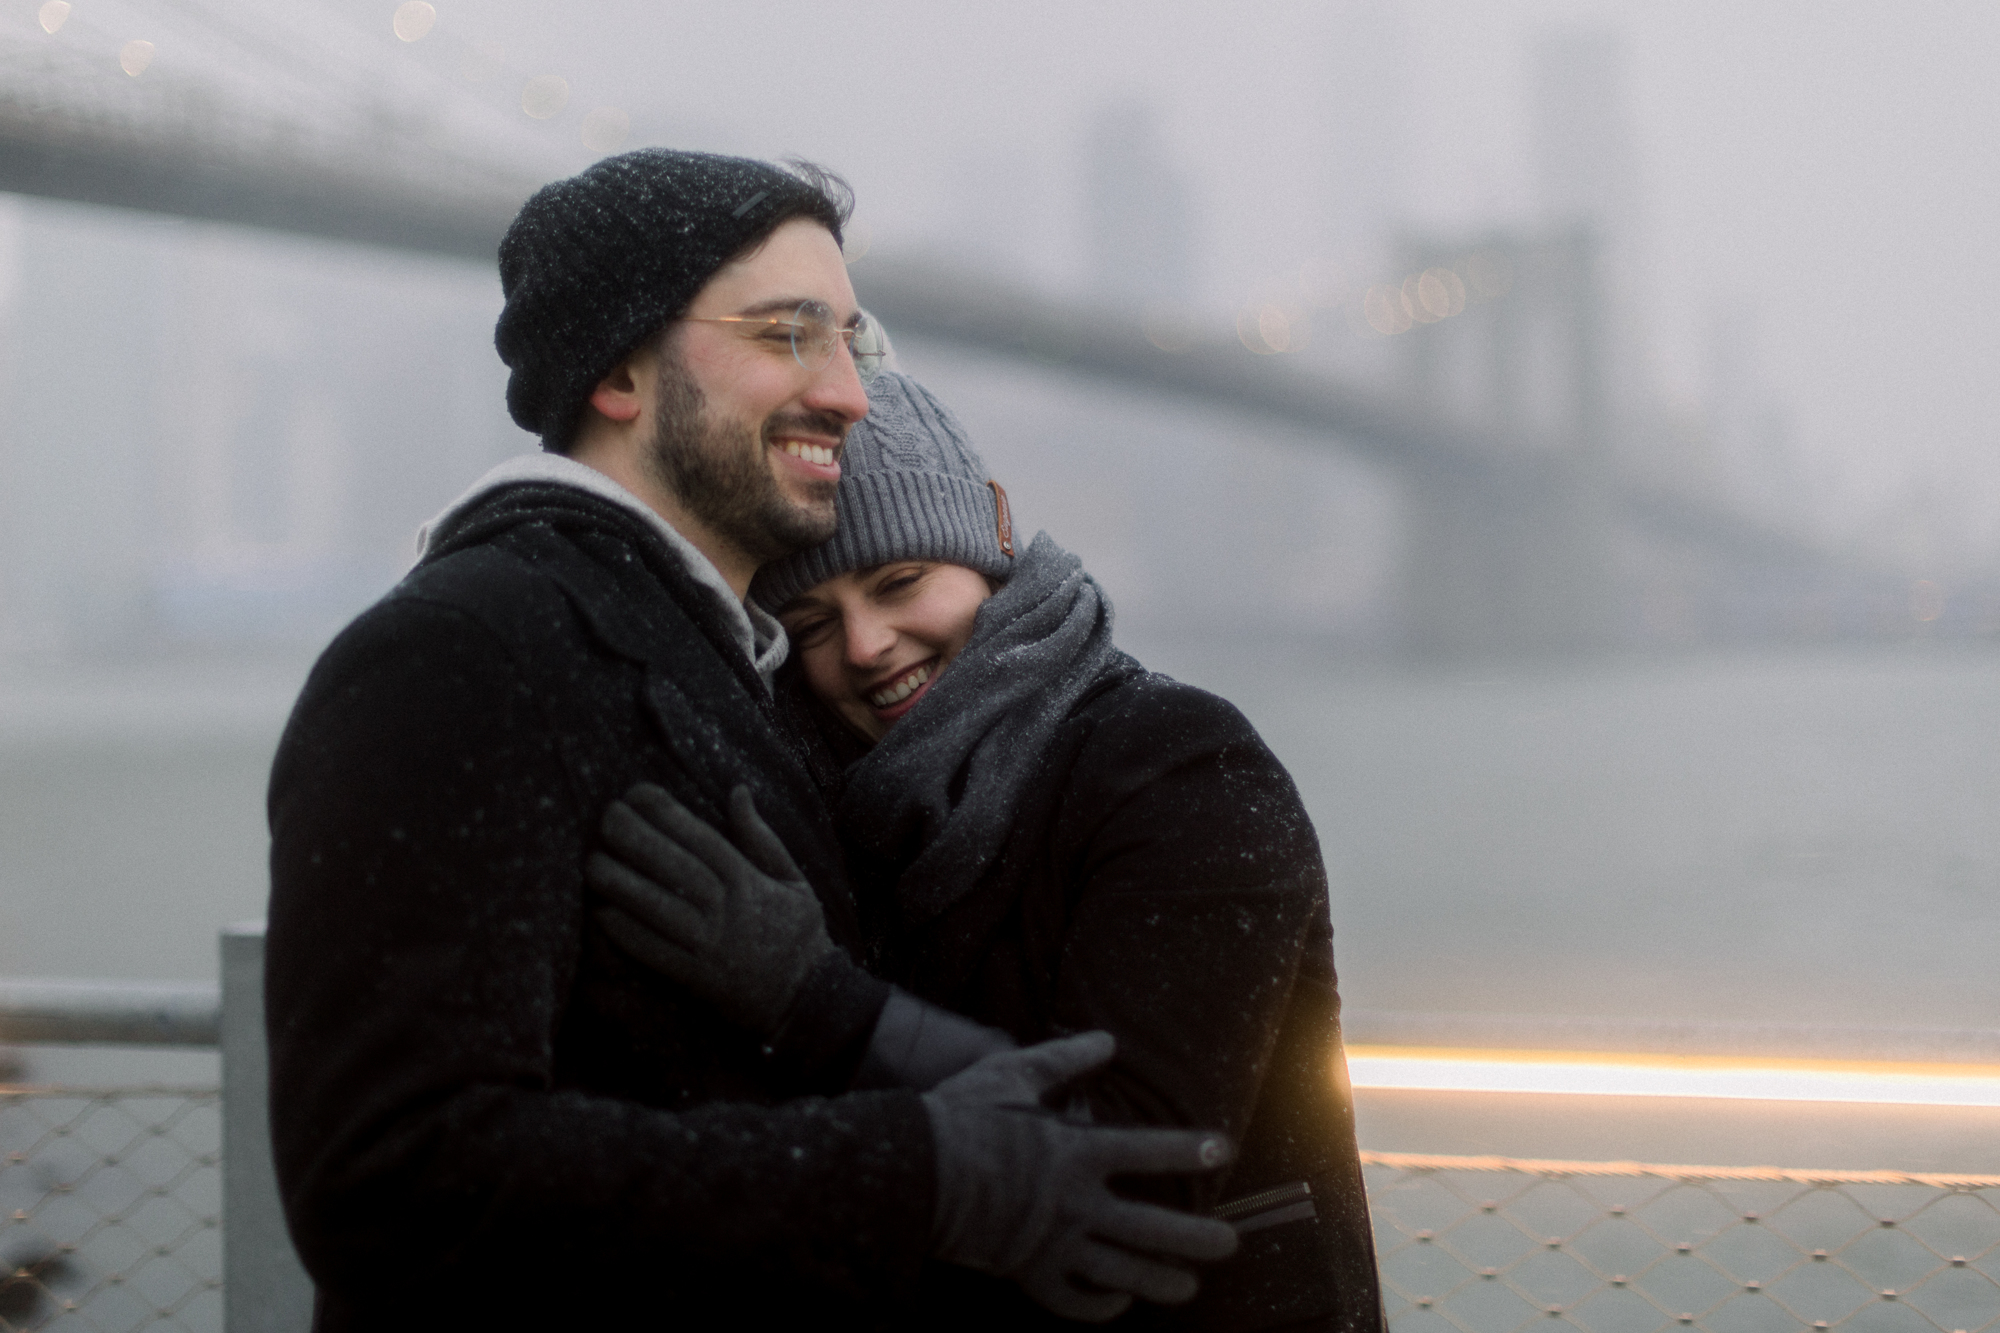 Snowstorm engagement photos in Brooklyn Bridge Park